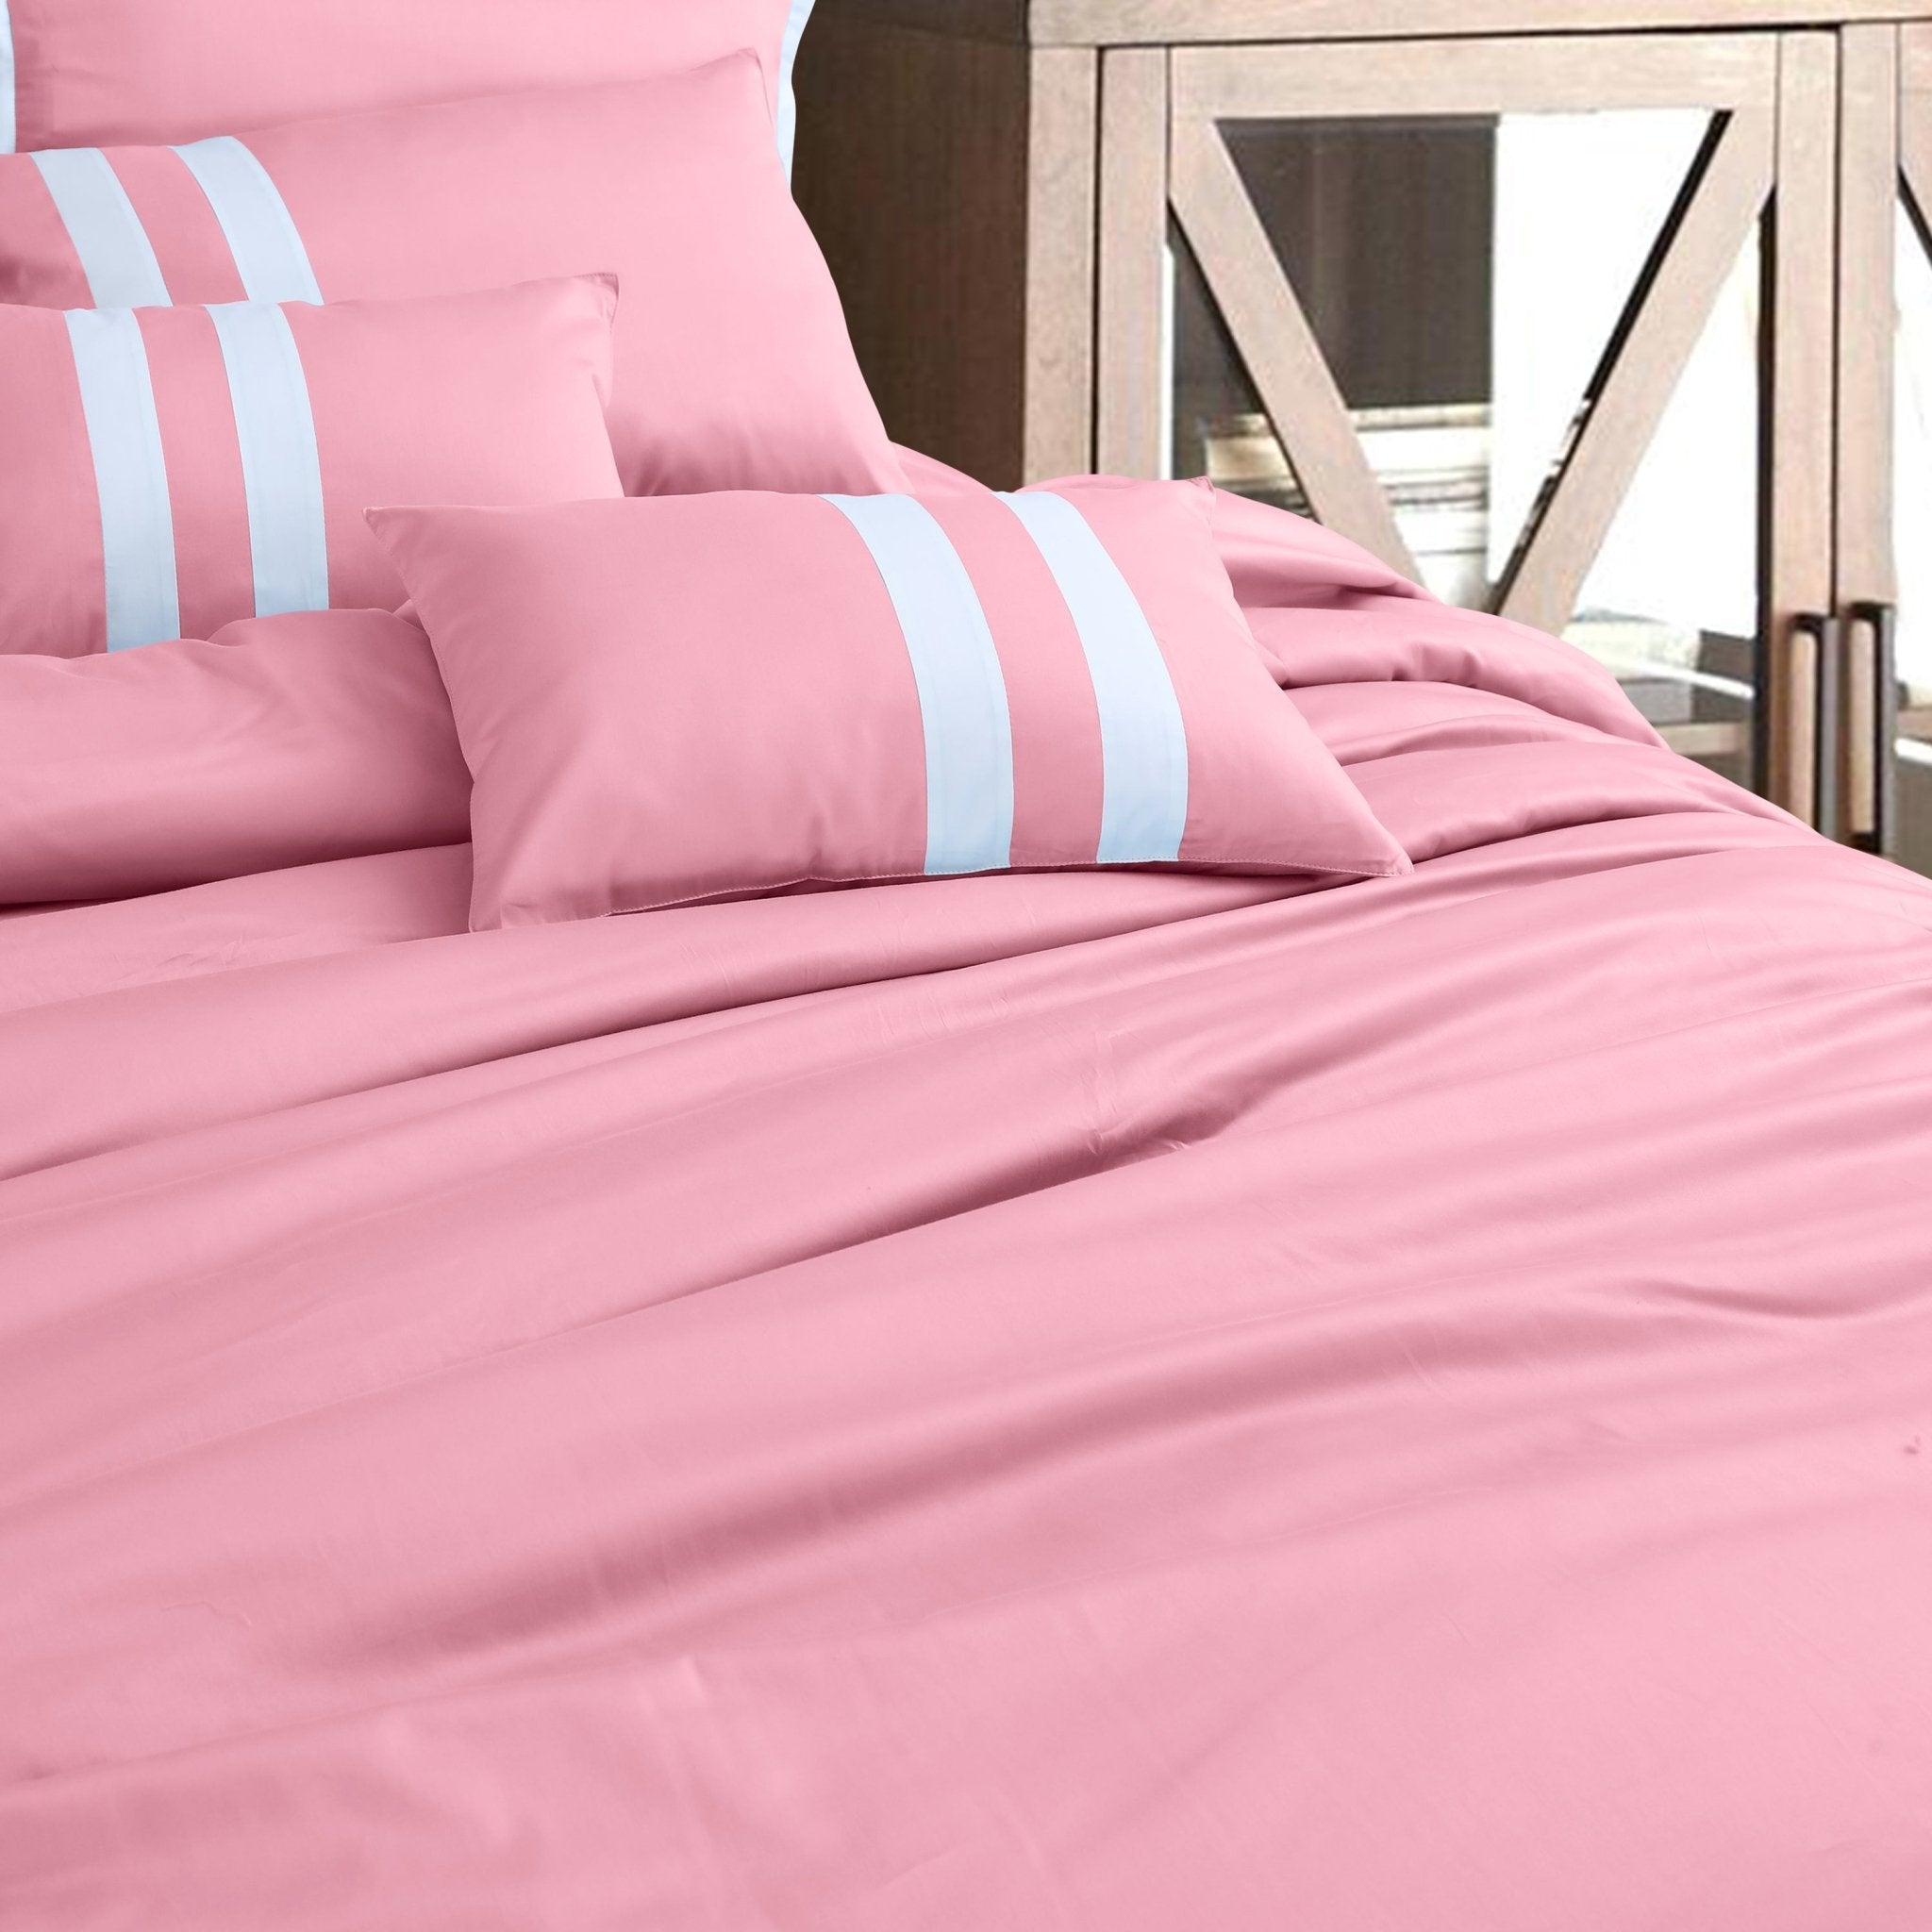 Malako Vivid Rose Pink Striped Plain 500 TC 100% Cotton King Size 8 Piece Duvet Cover Set - MALAKO